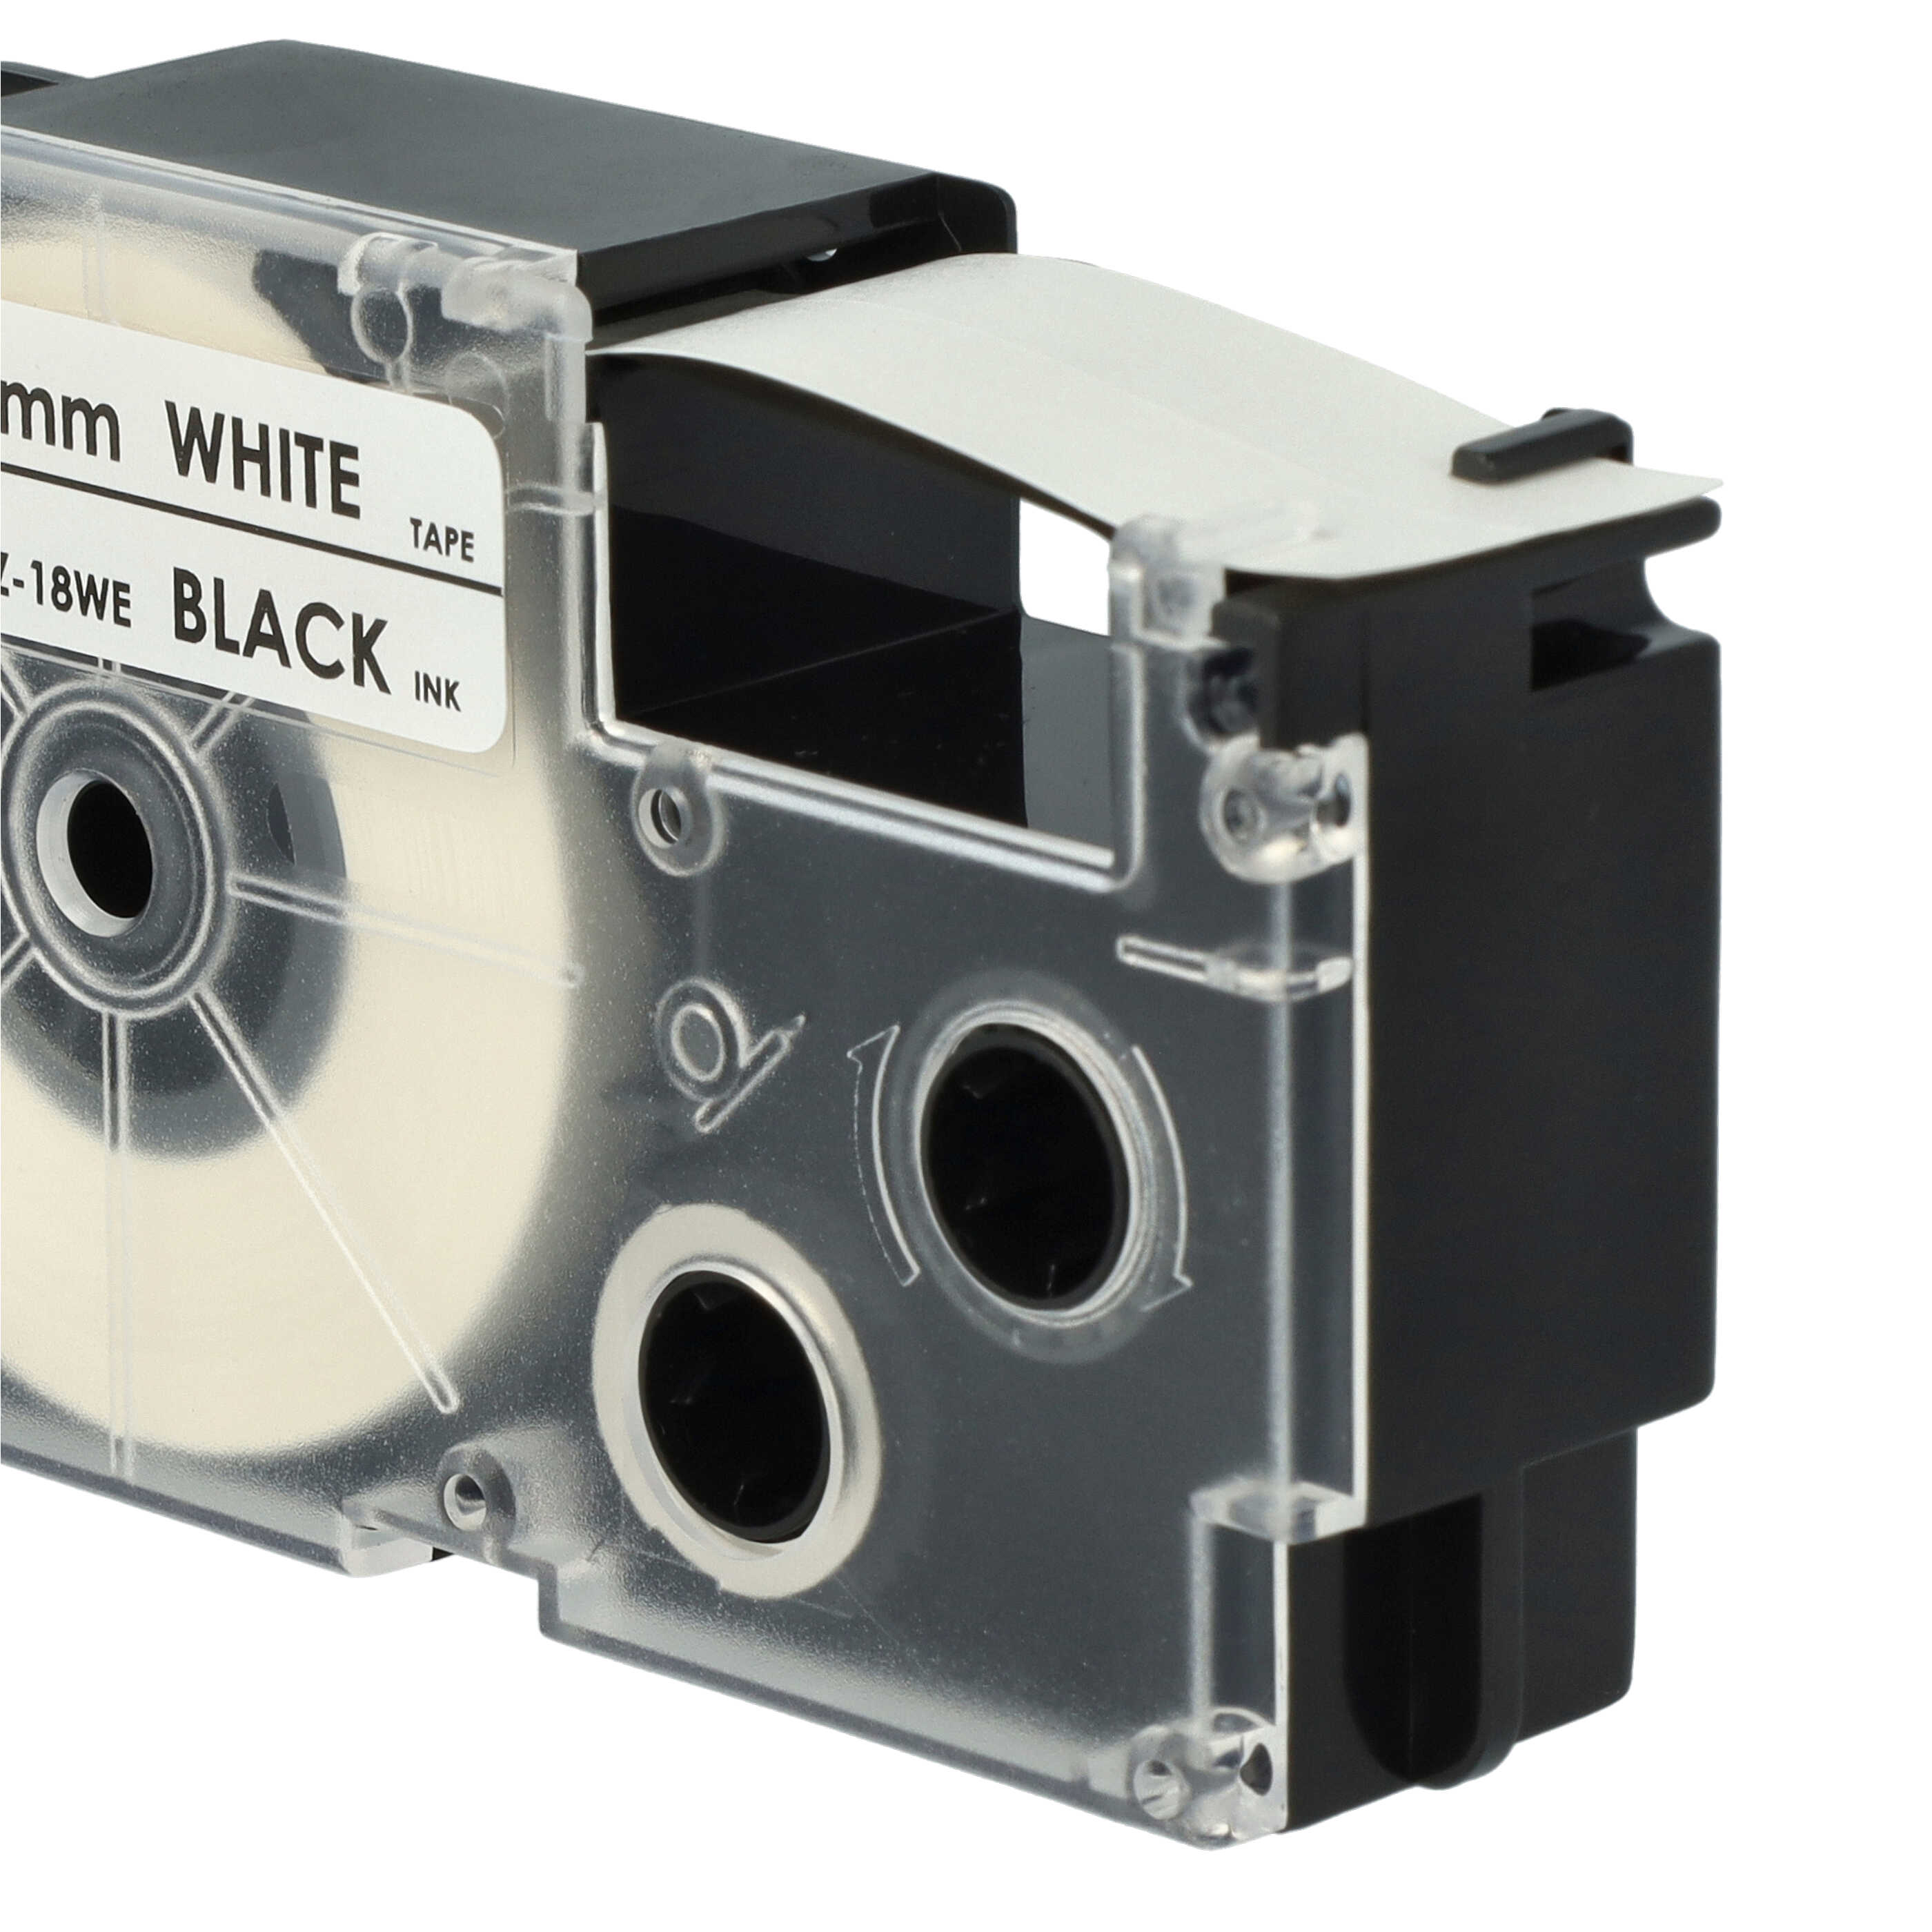 10x Casete cinta escritura reemplaza Casio XR-18WE, XR-18WE1 Negro su Blanco